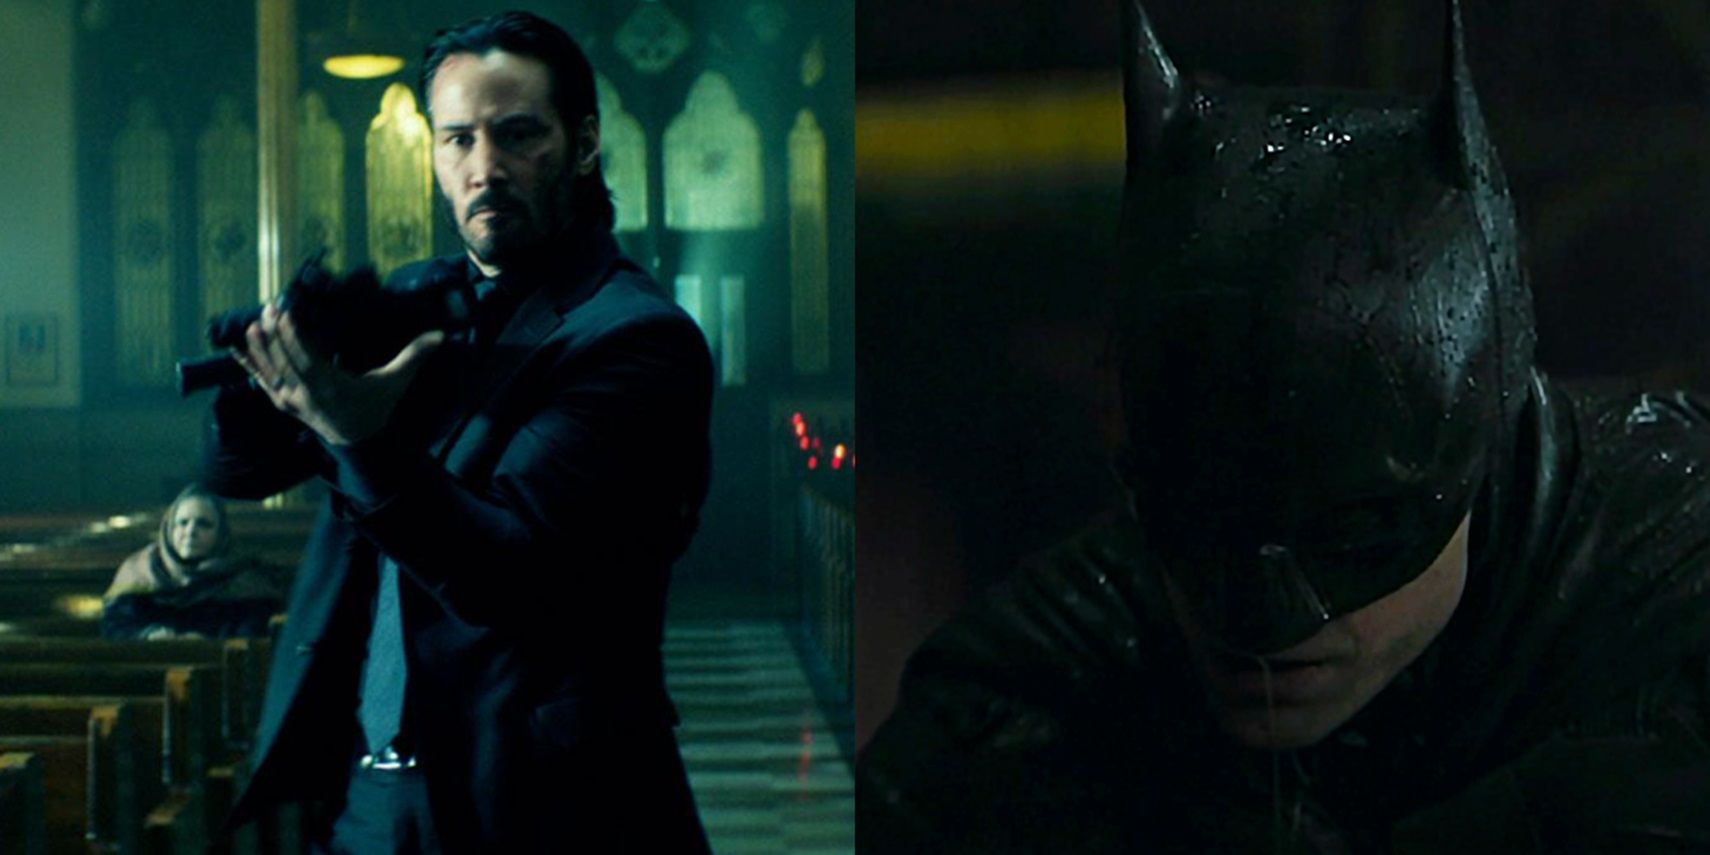 Keanu Reeves as John Wick and Robert Pattinson as Batman